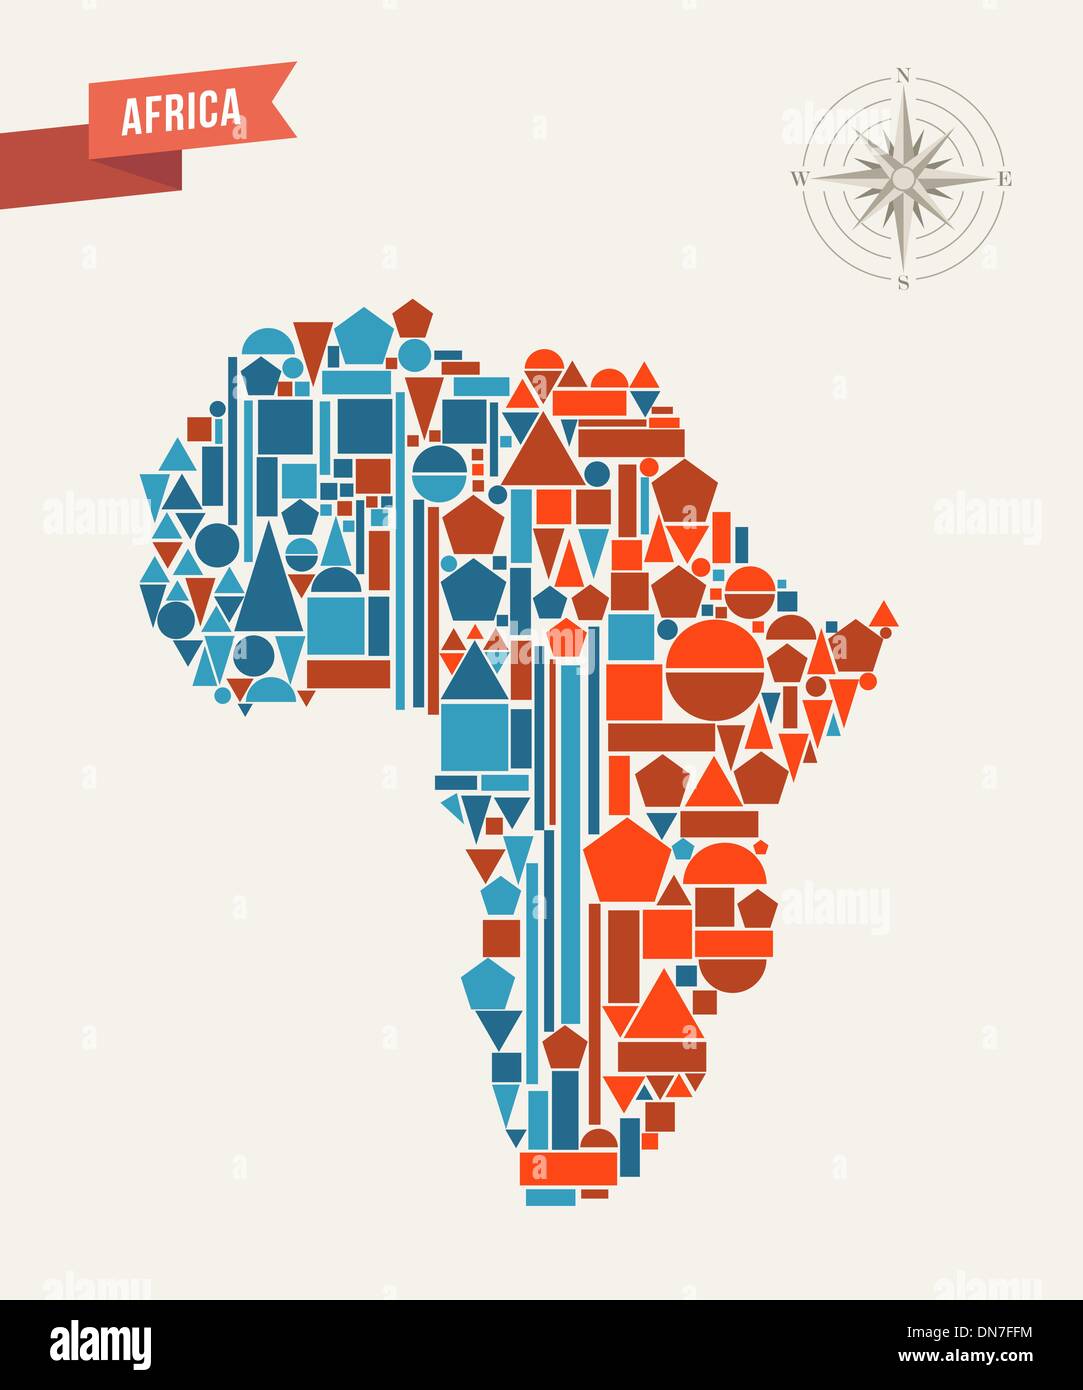 Africa geometric figures map Stock Vector